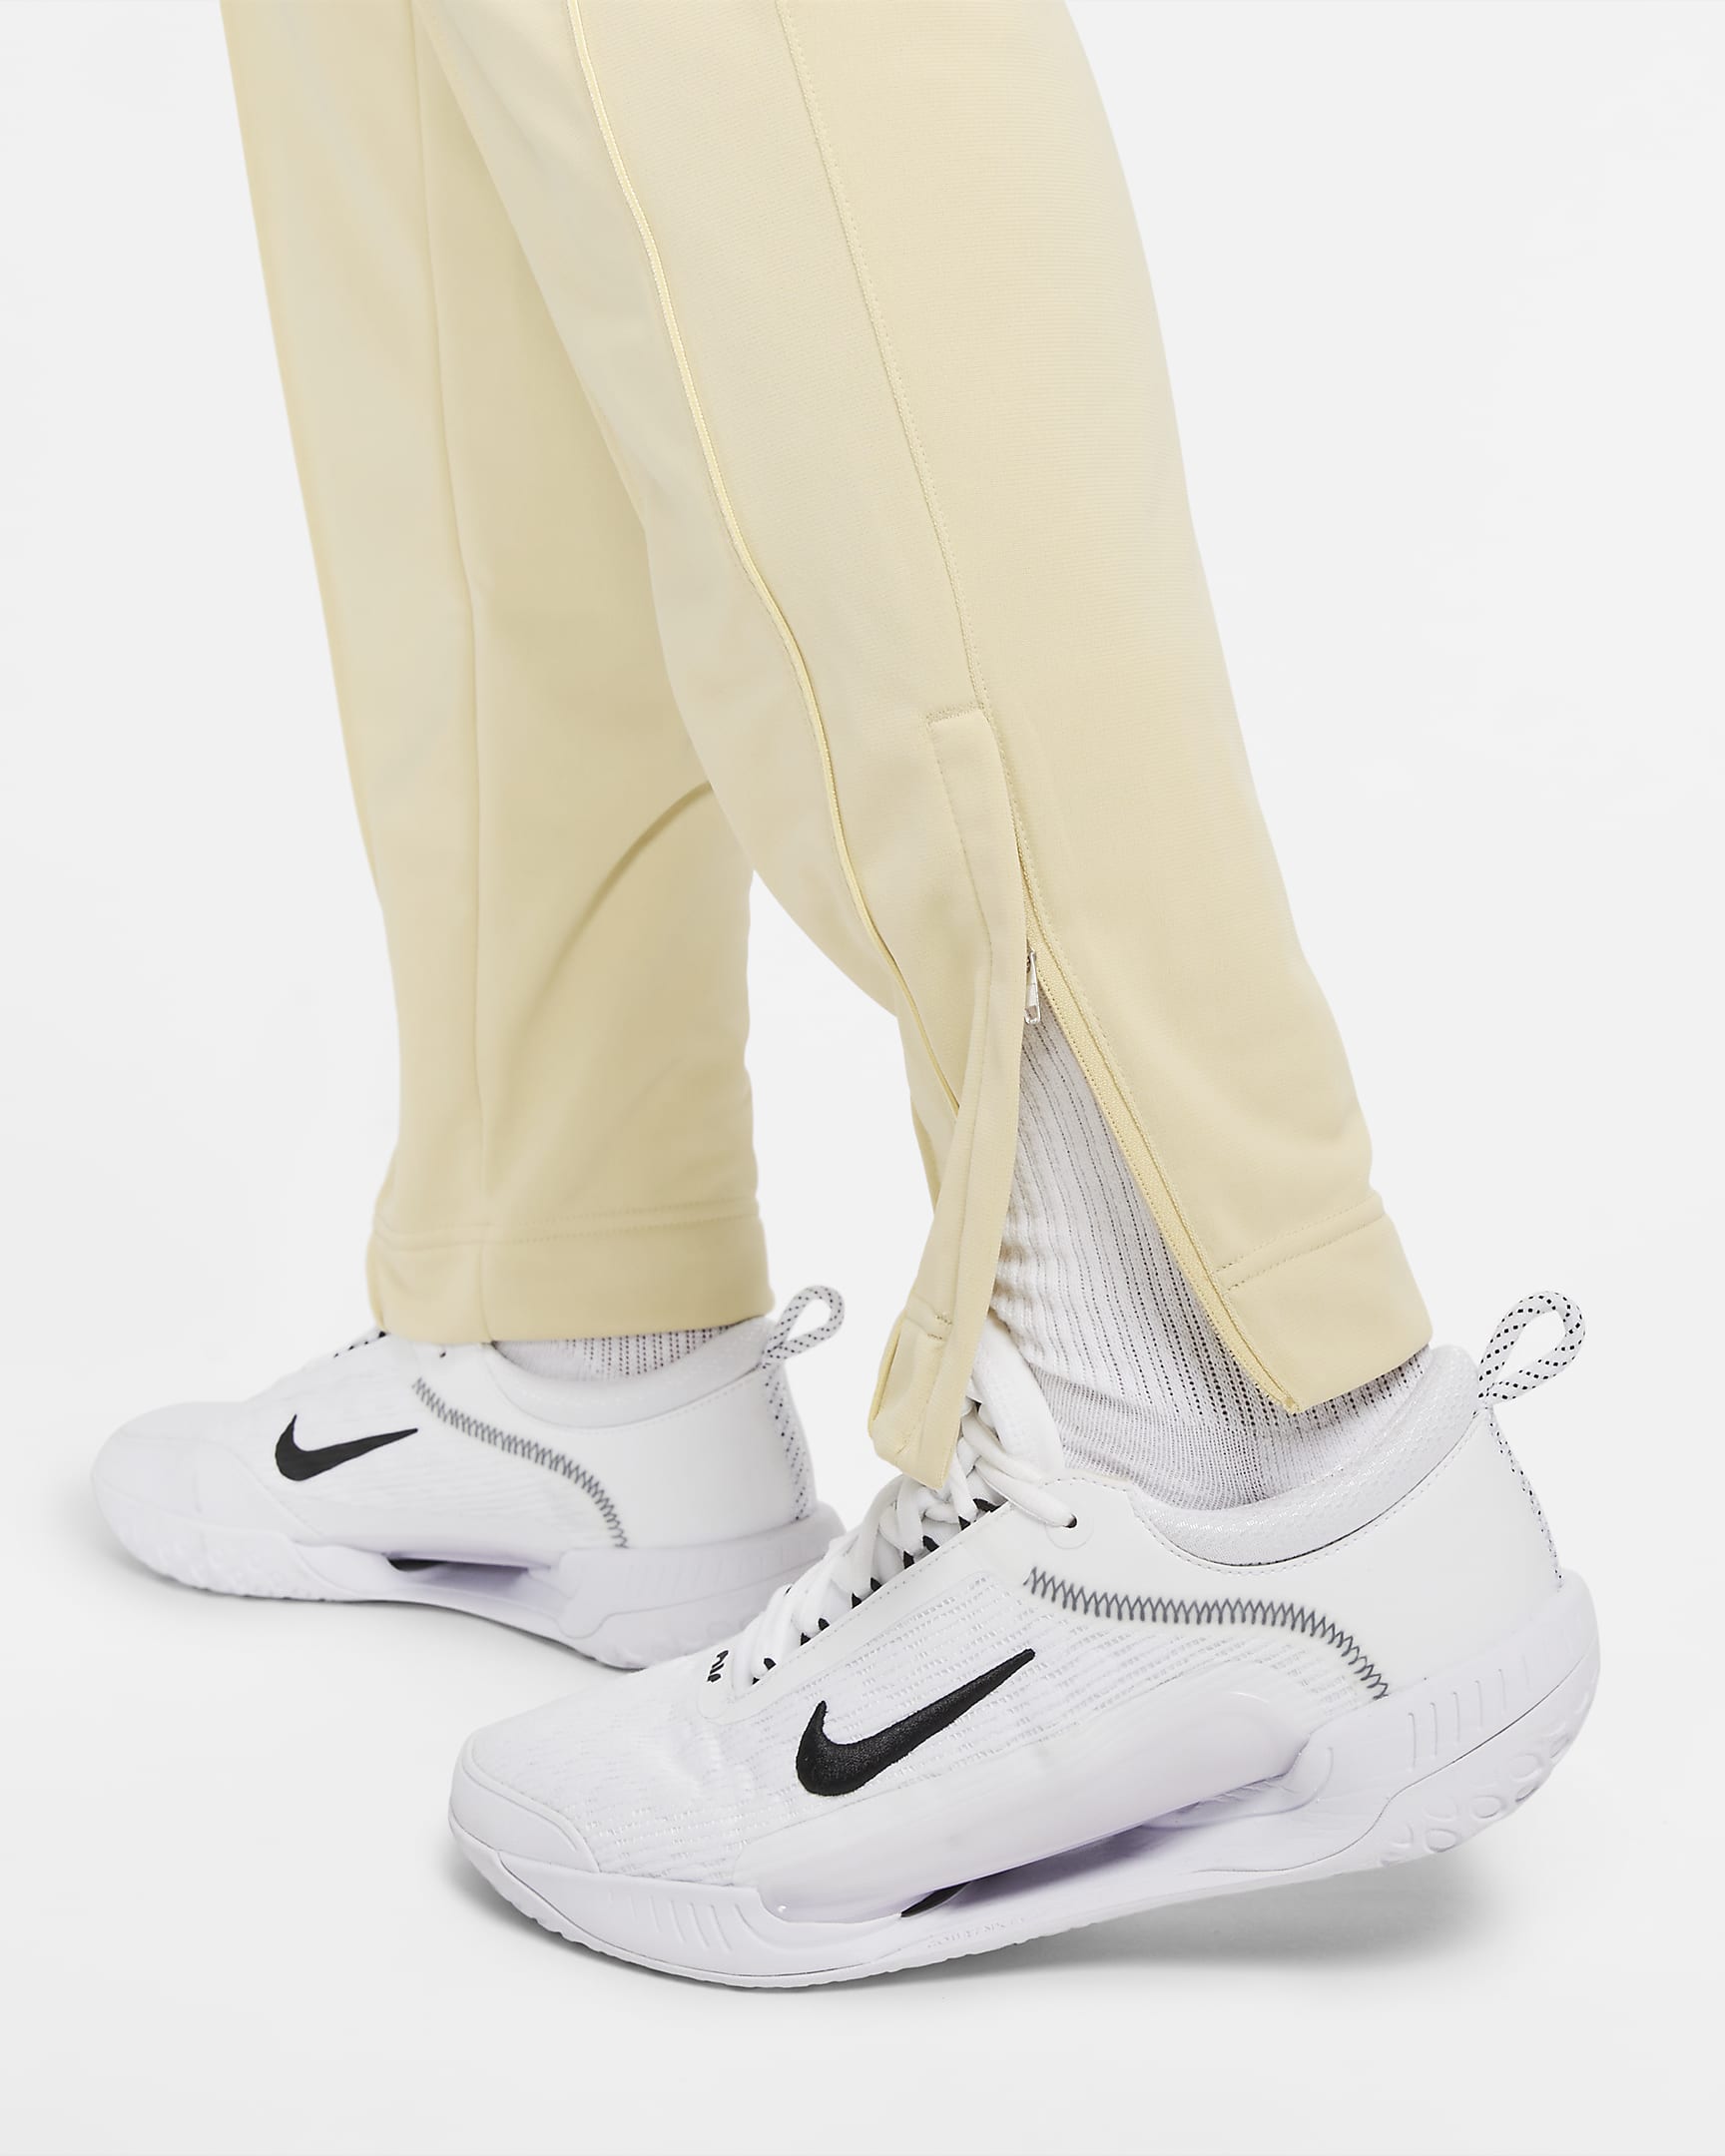 NikeCourt Men's Tennis Trousers. Nike UK